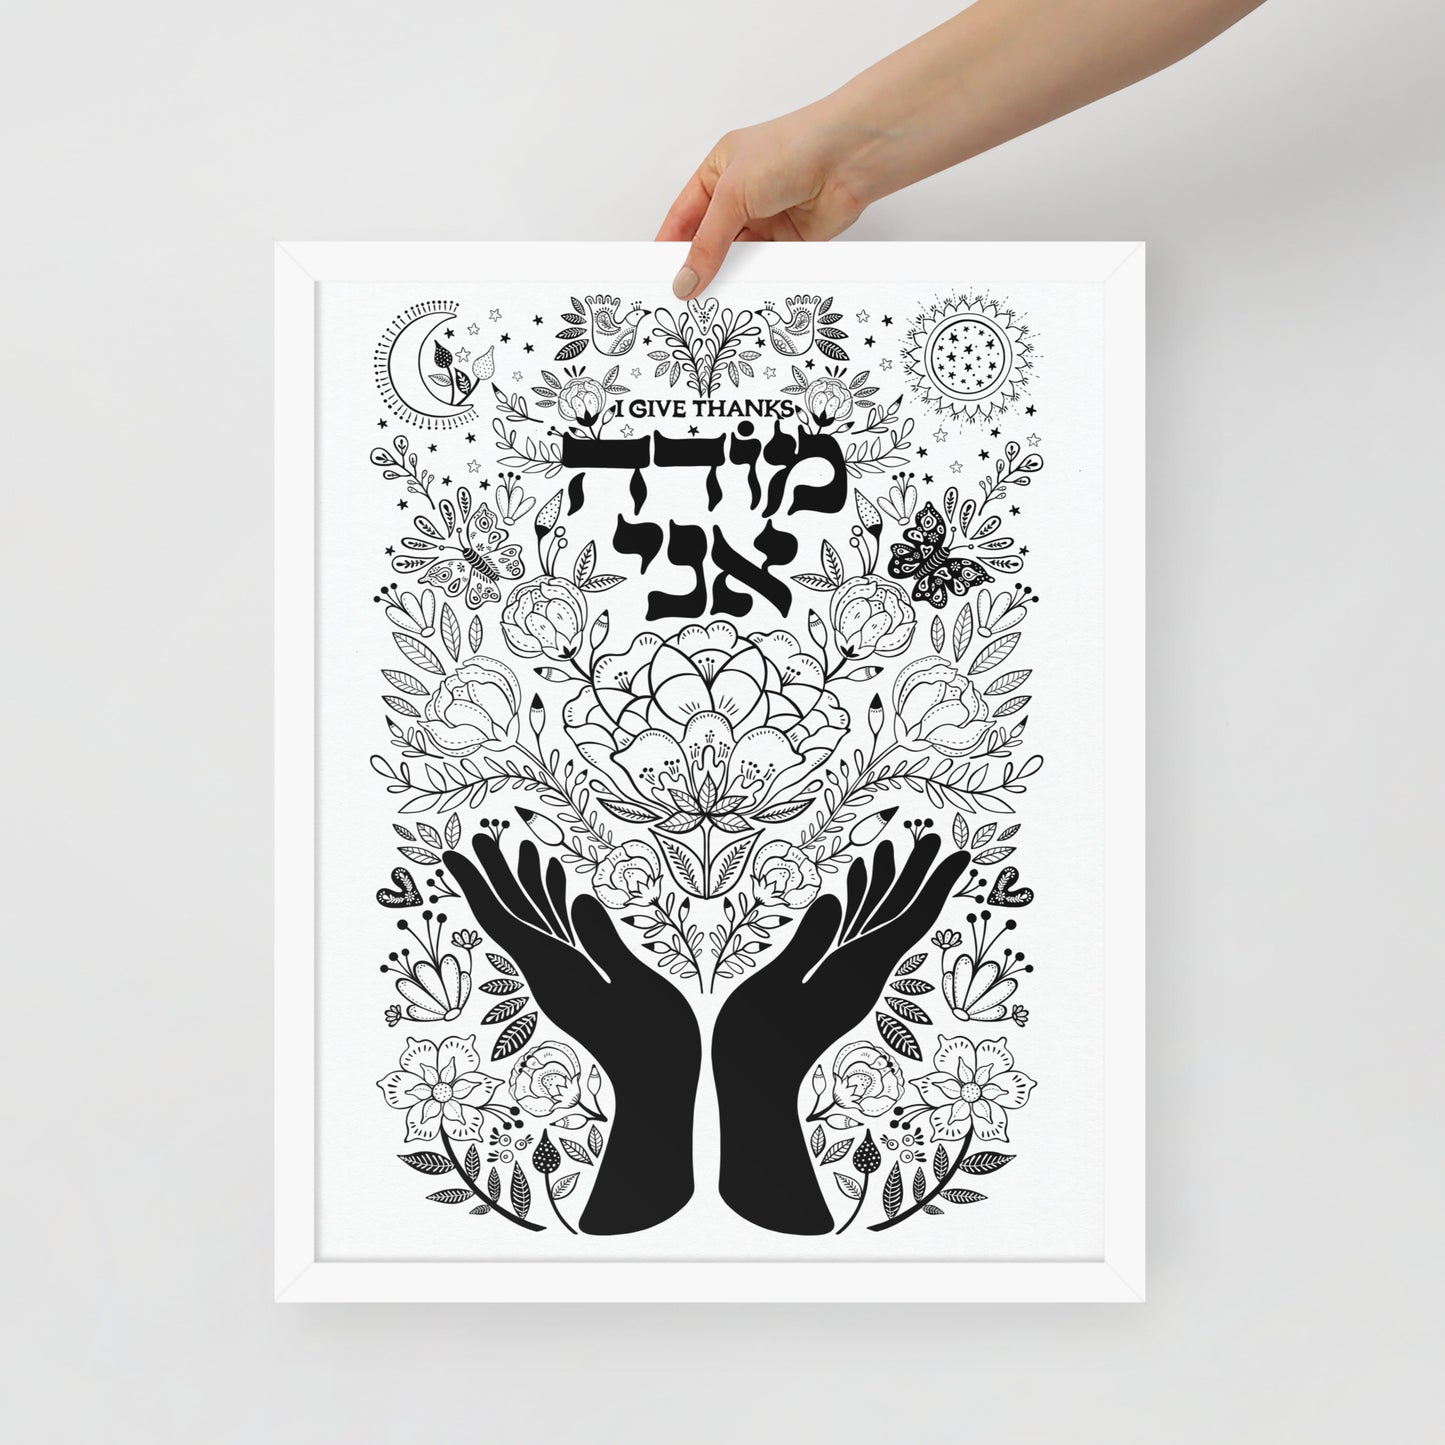 Framed Art ready to Hang Modeh Ani Jewish Prayer - I give thanks - Black